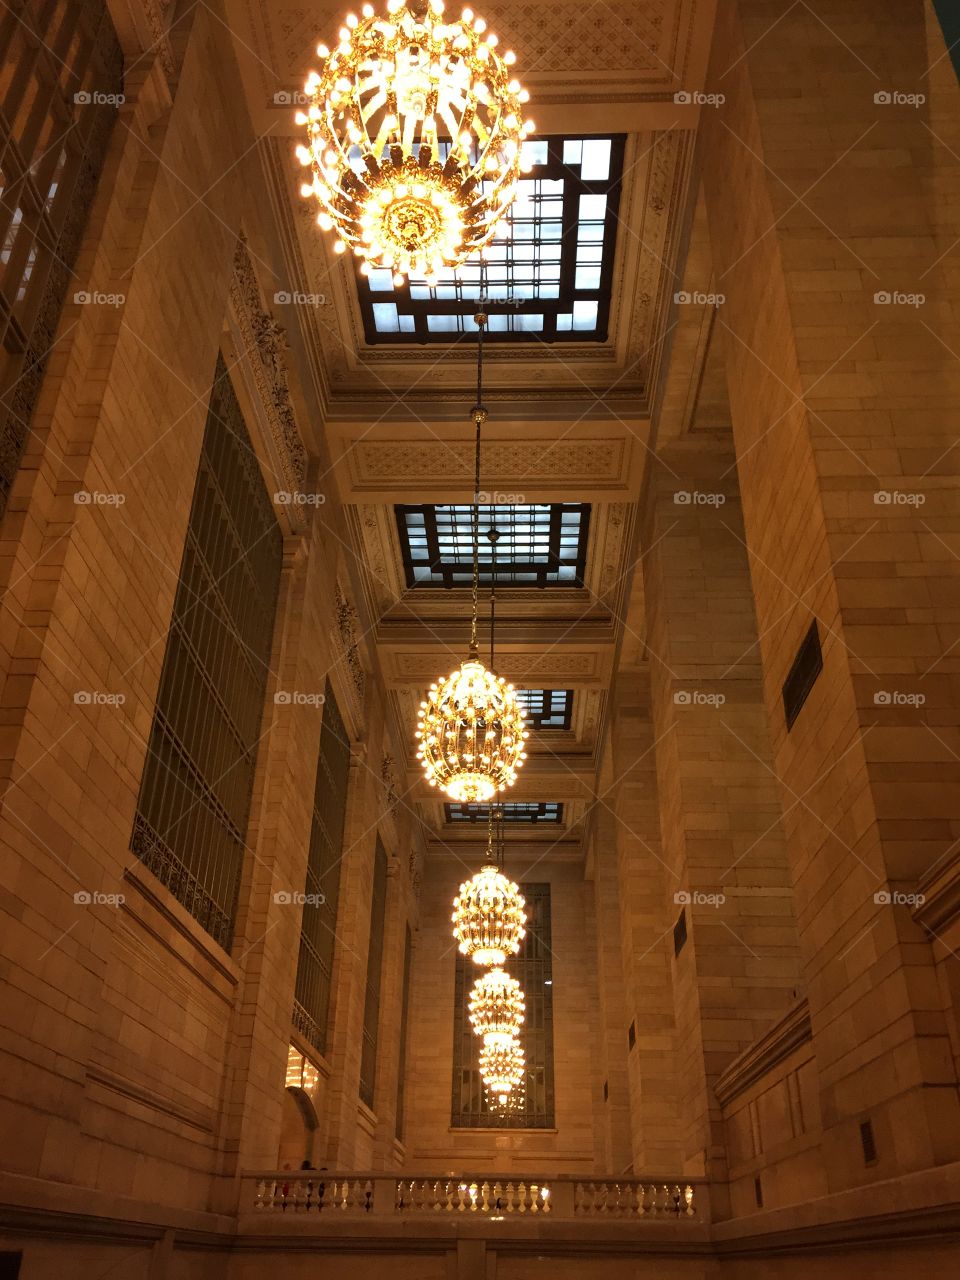 Grand Central Station - New York, NY